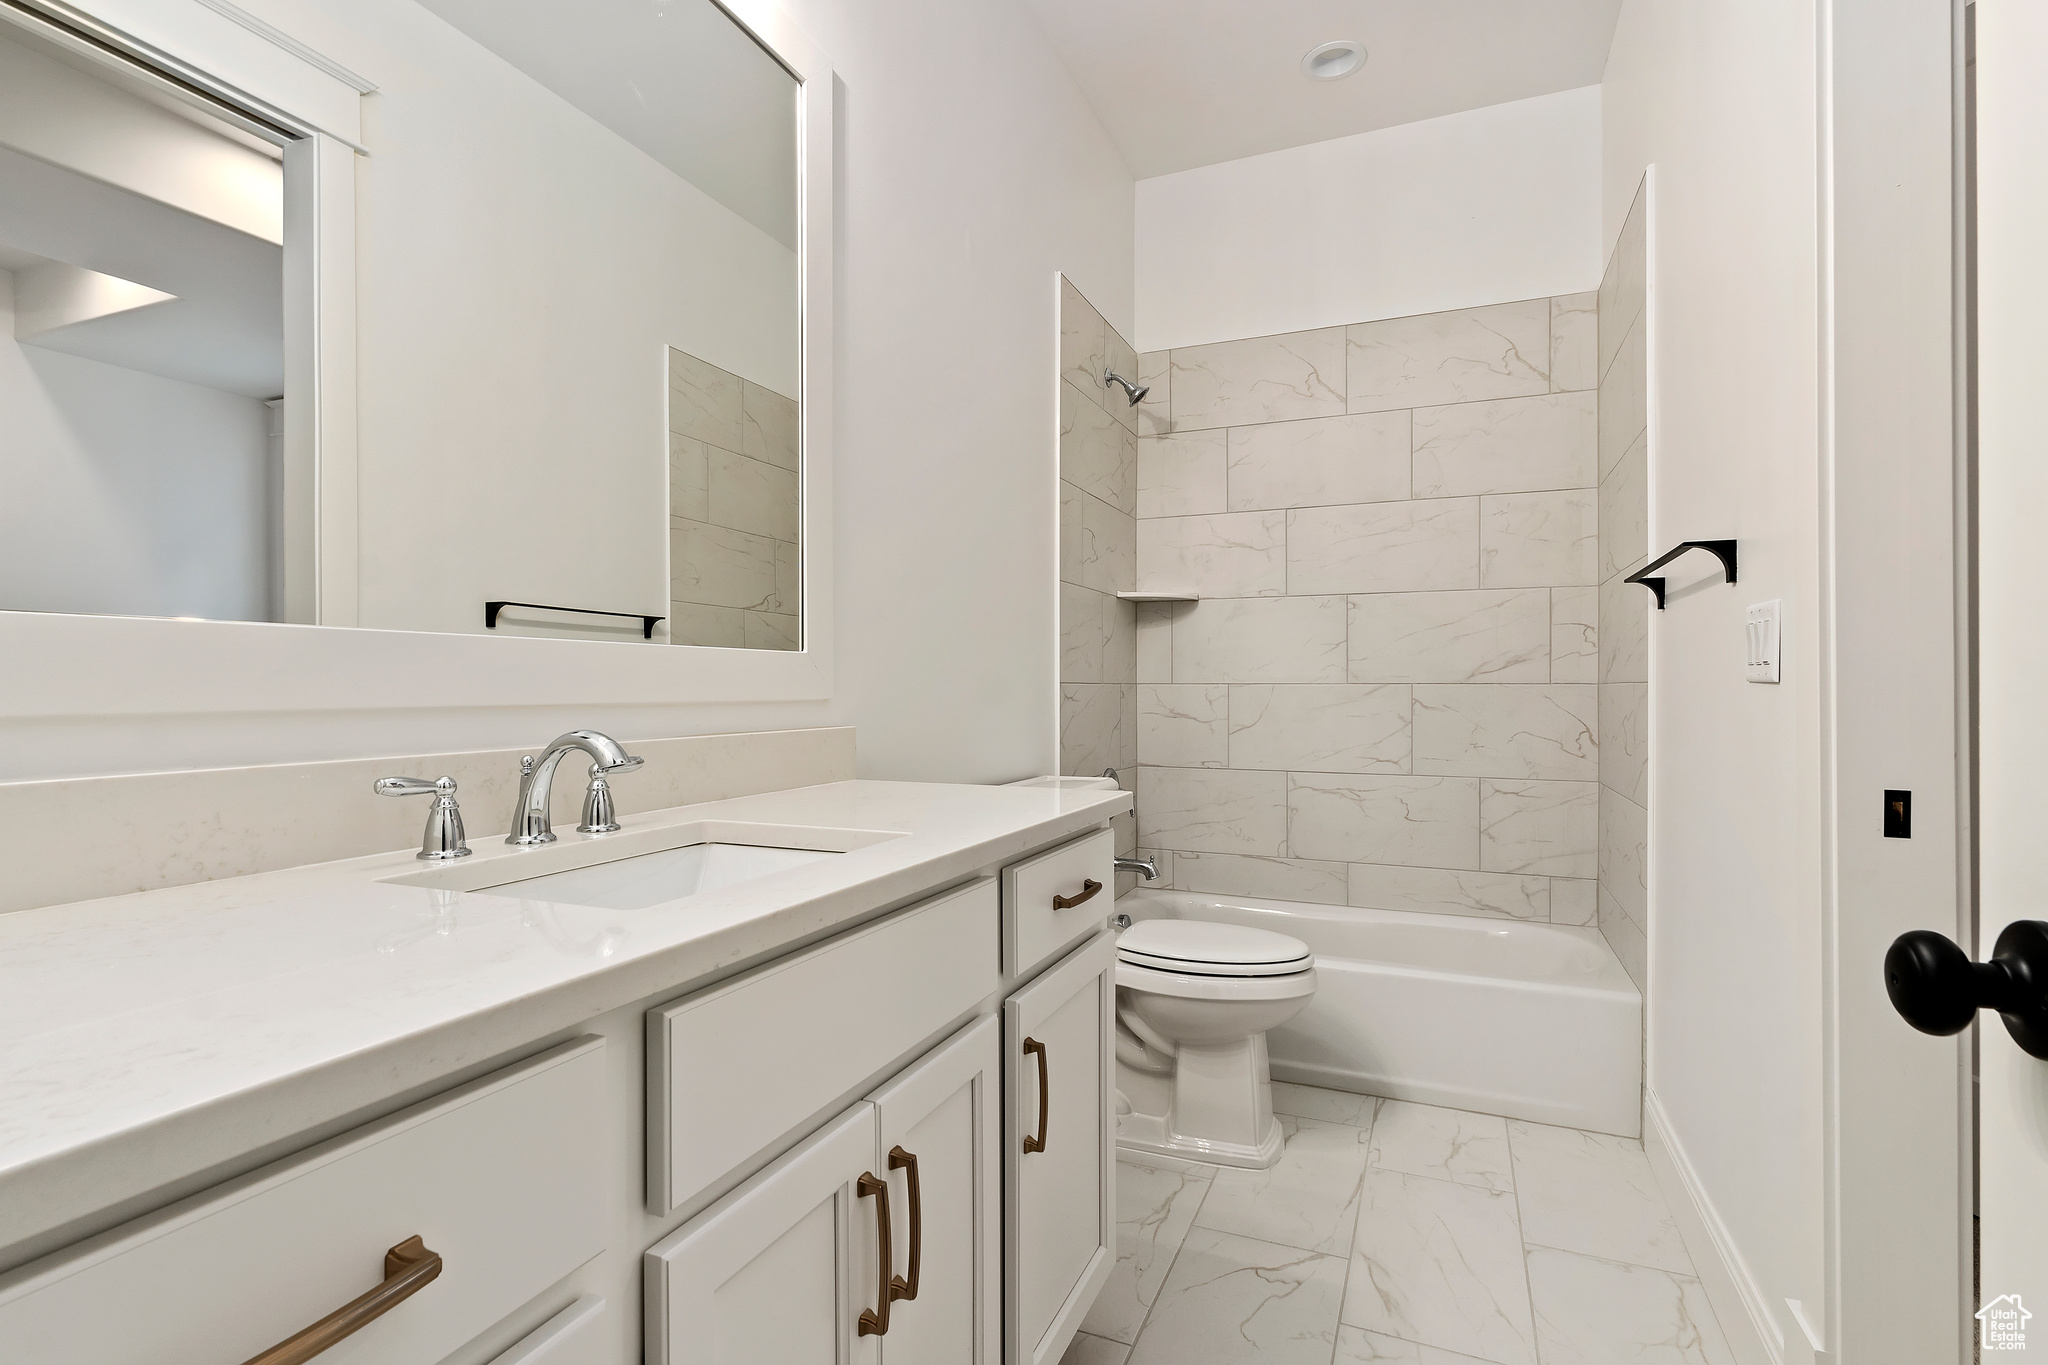 Full bathroom featuring vanity, toilet, tile floors, and tiled shower / bath